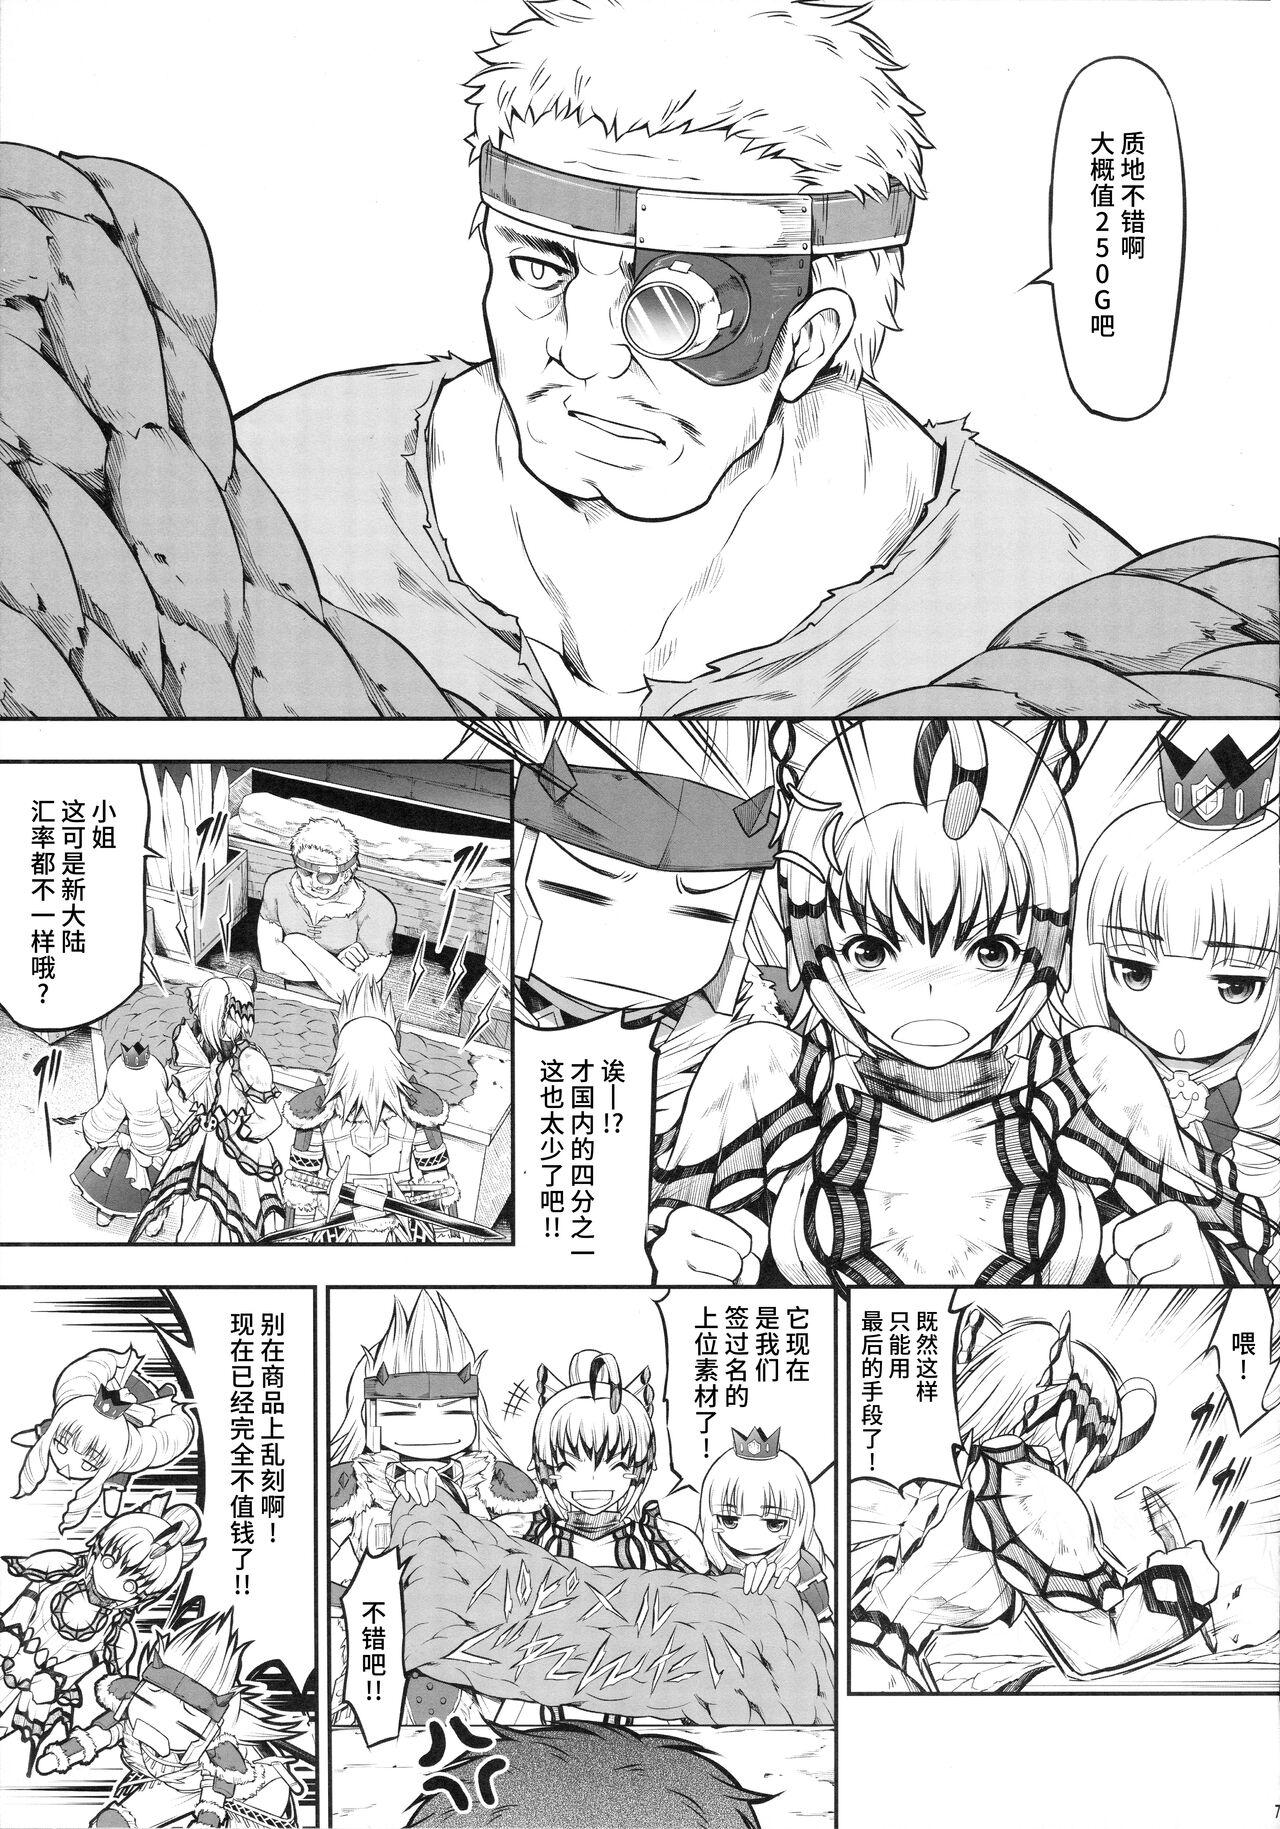 Mom Solo Hunter no Seitai WORLD 9 - Monster hunter Assfucked - Page 6